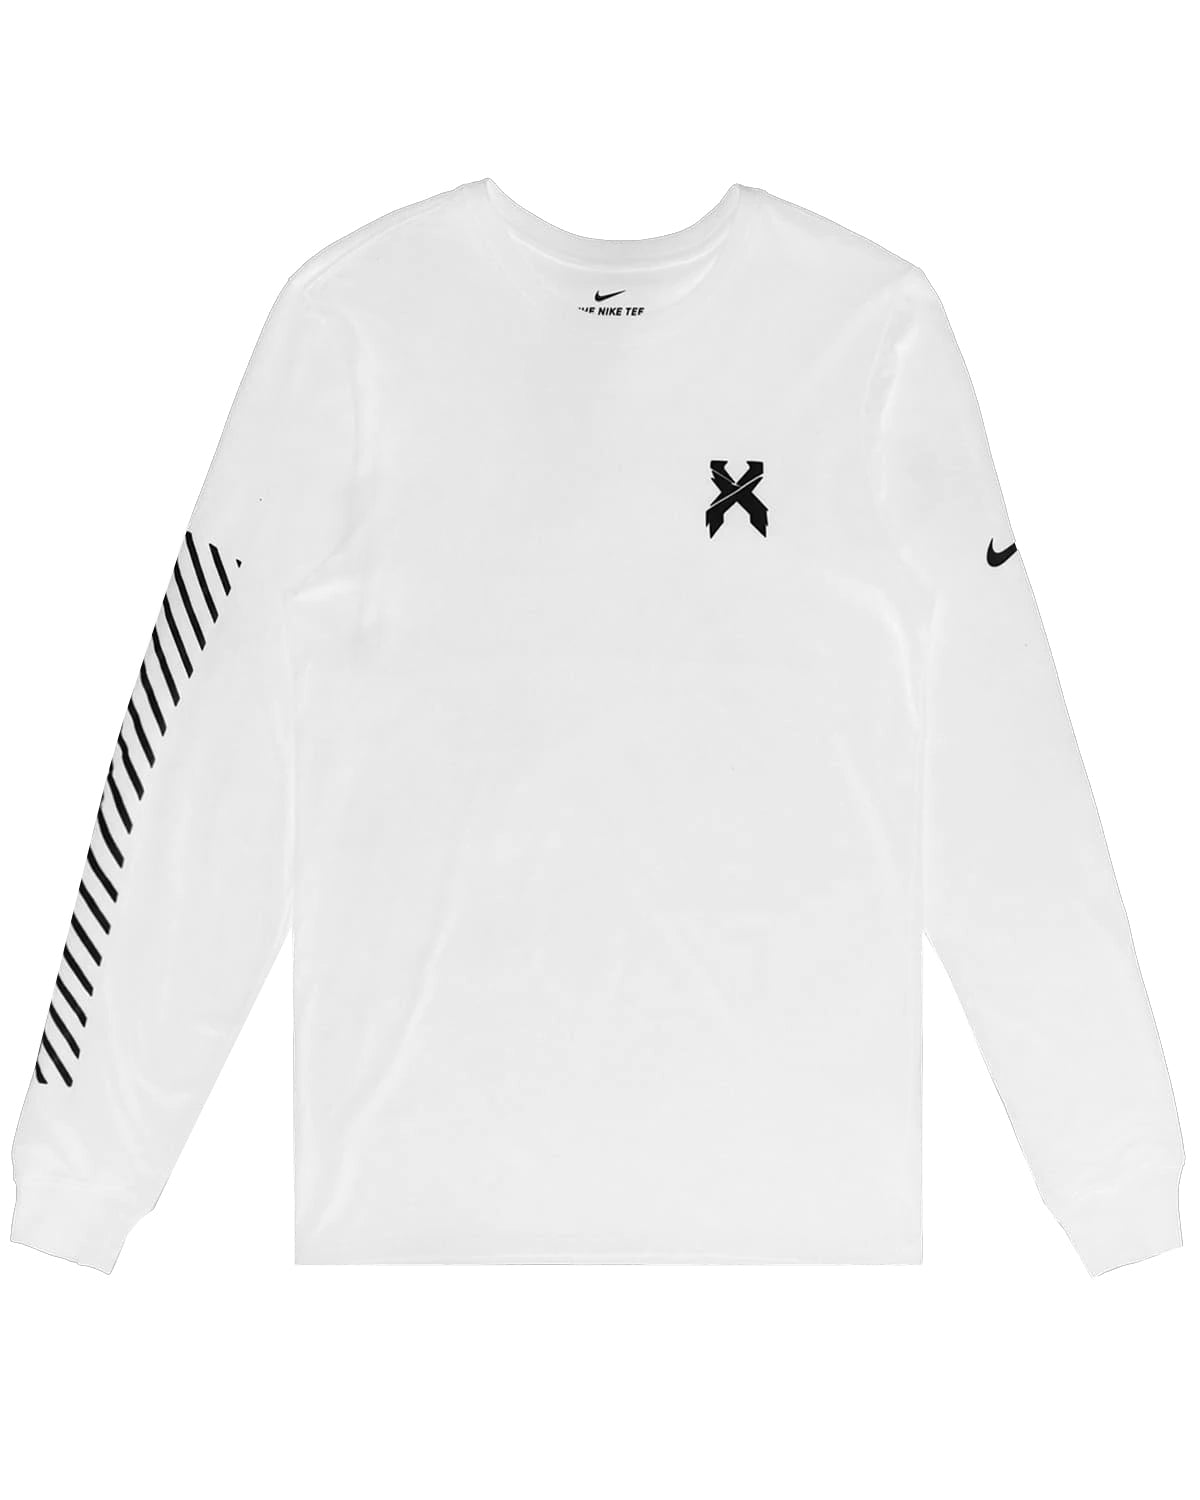 white nike shirt with black logo